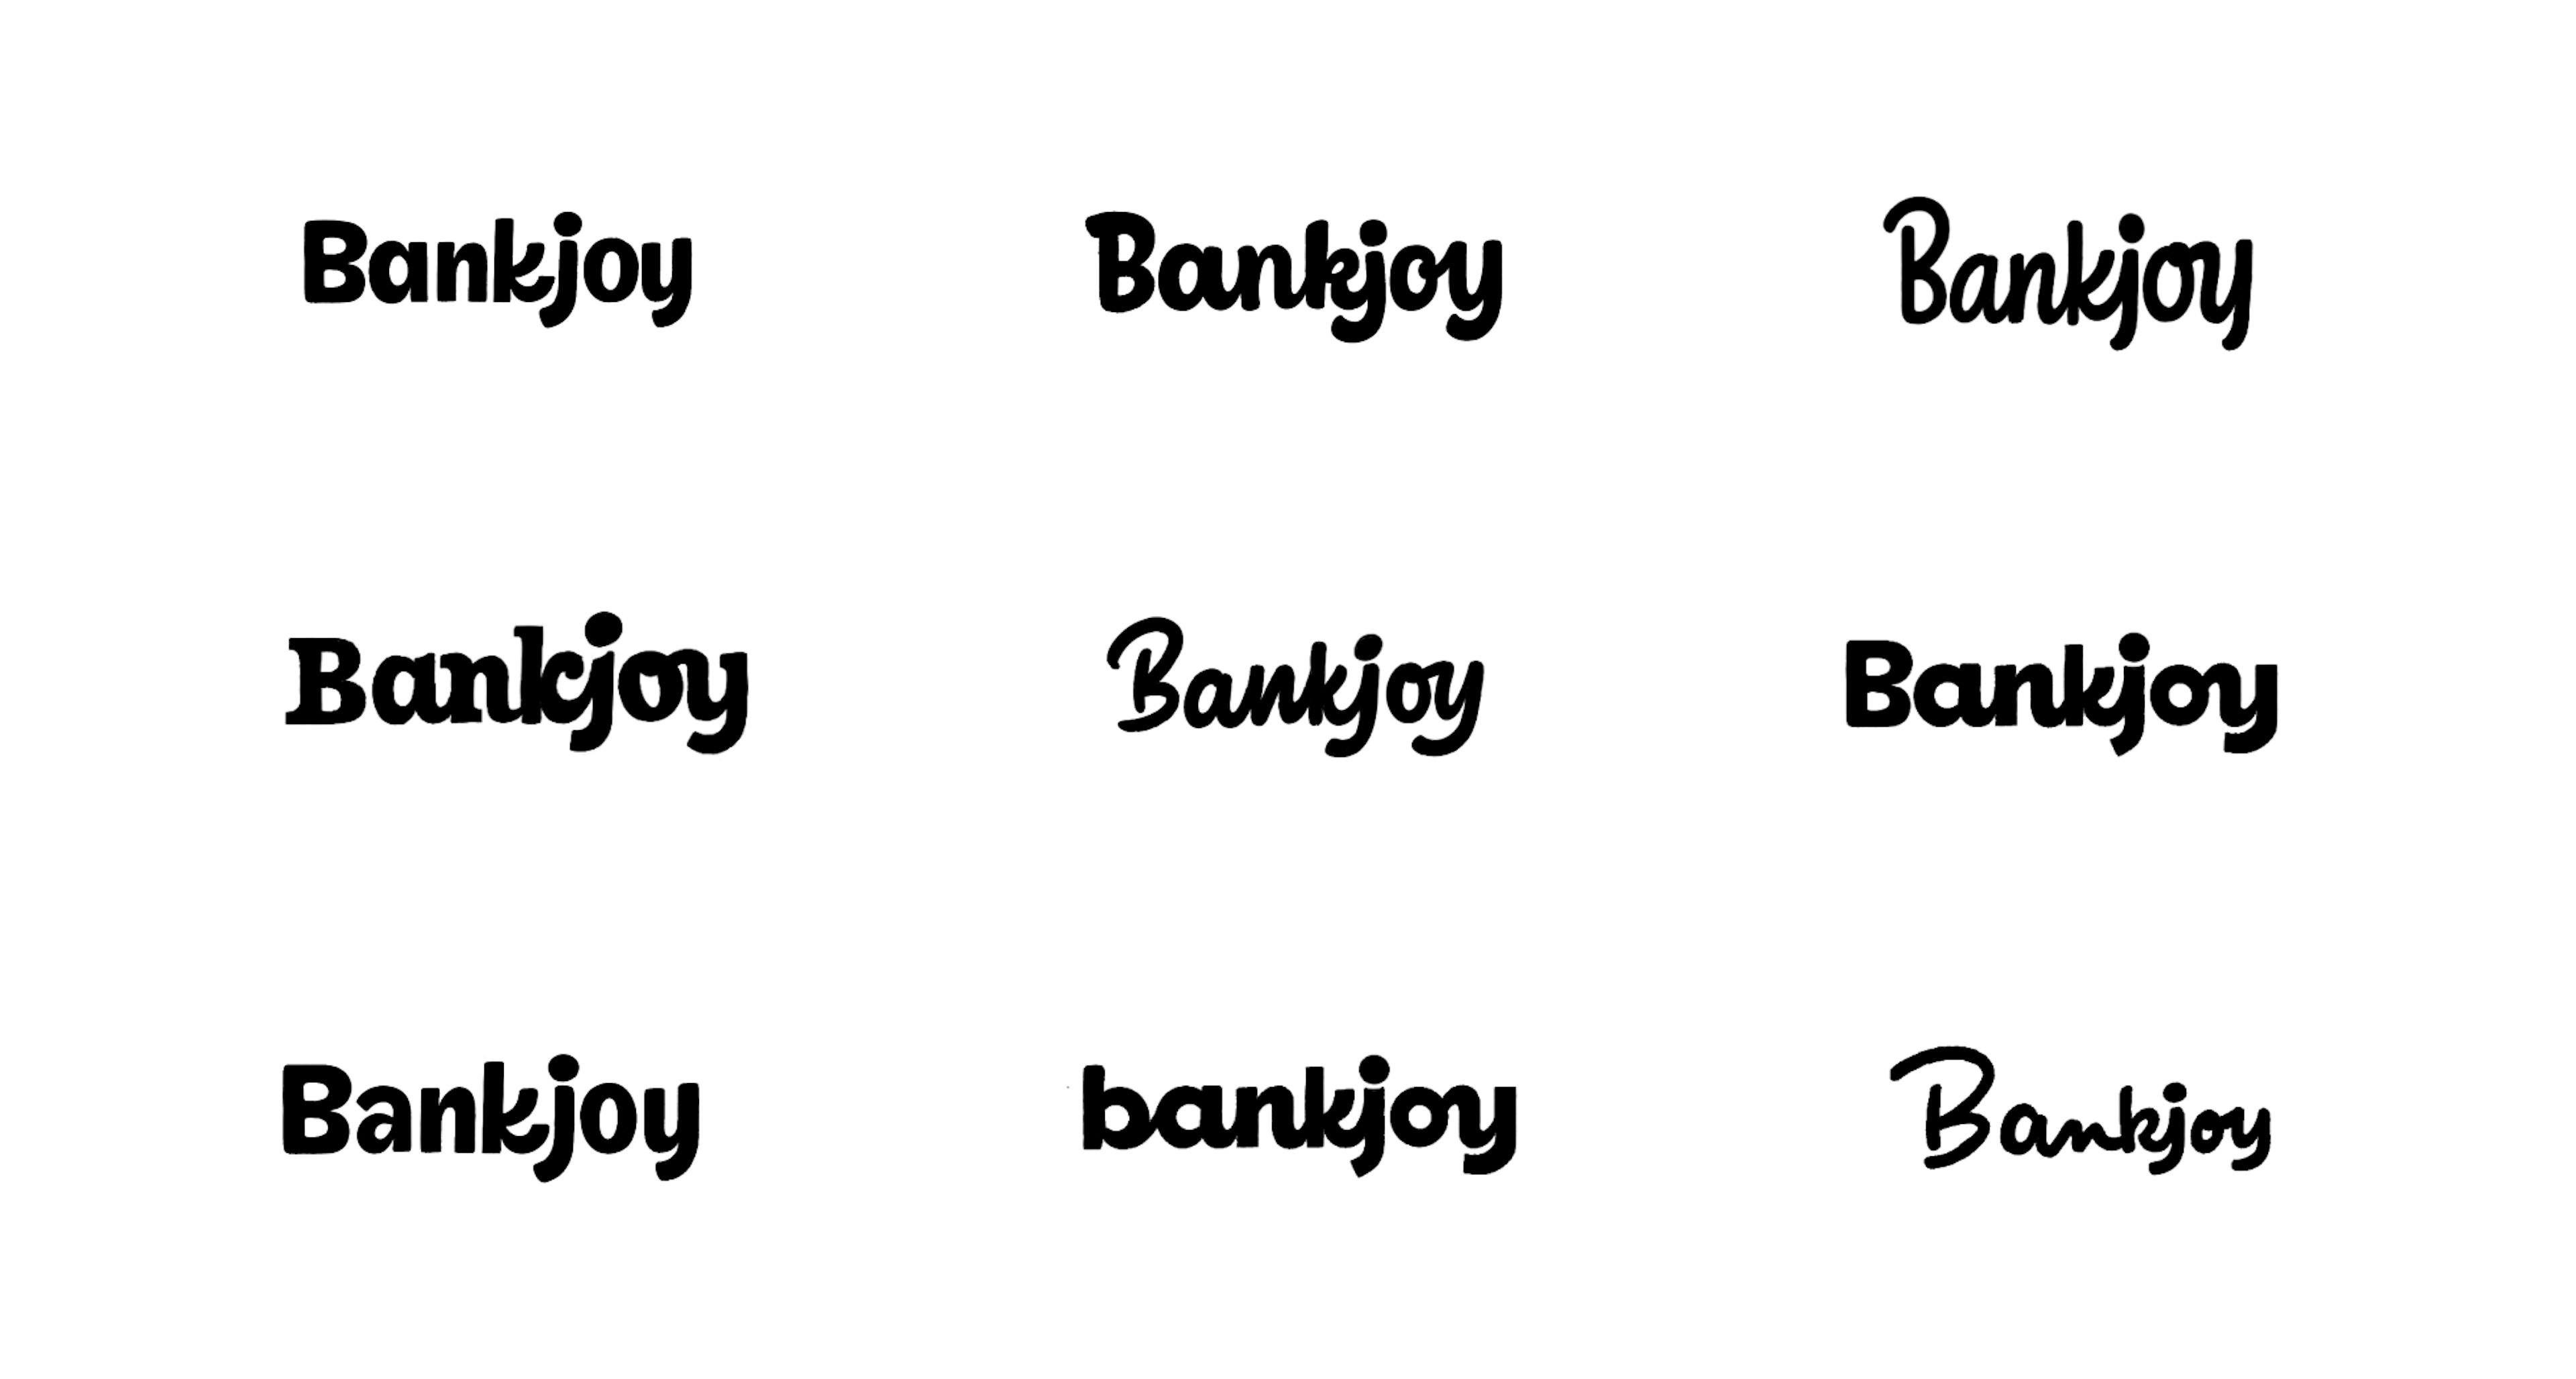 Bankjoy sketches